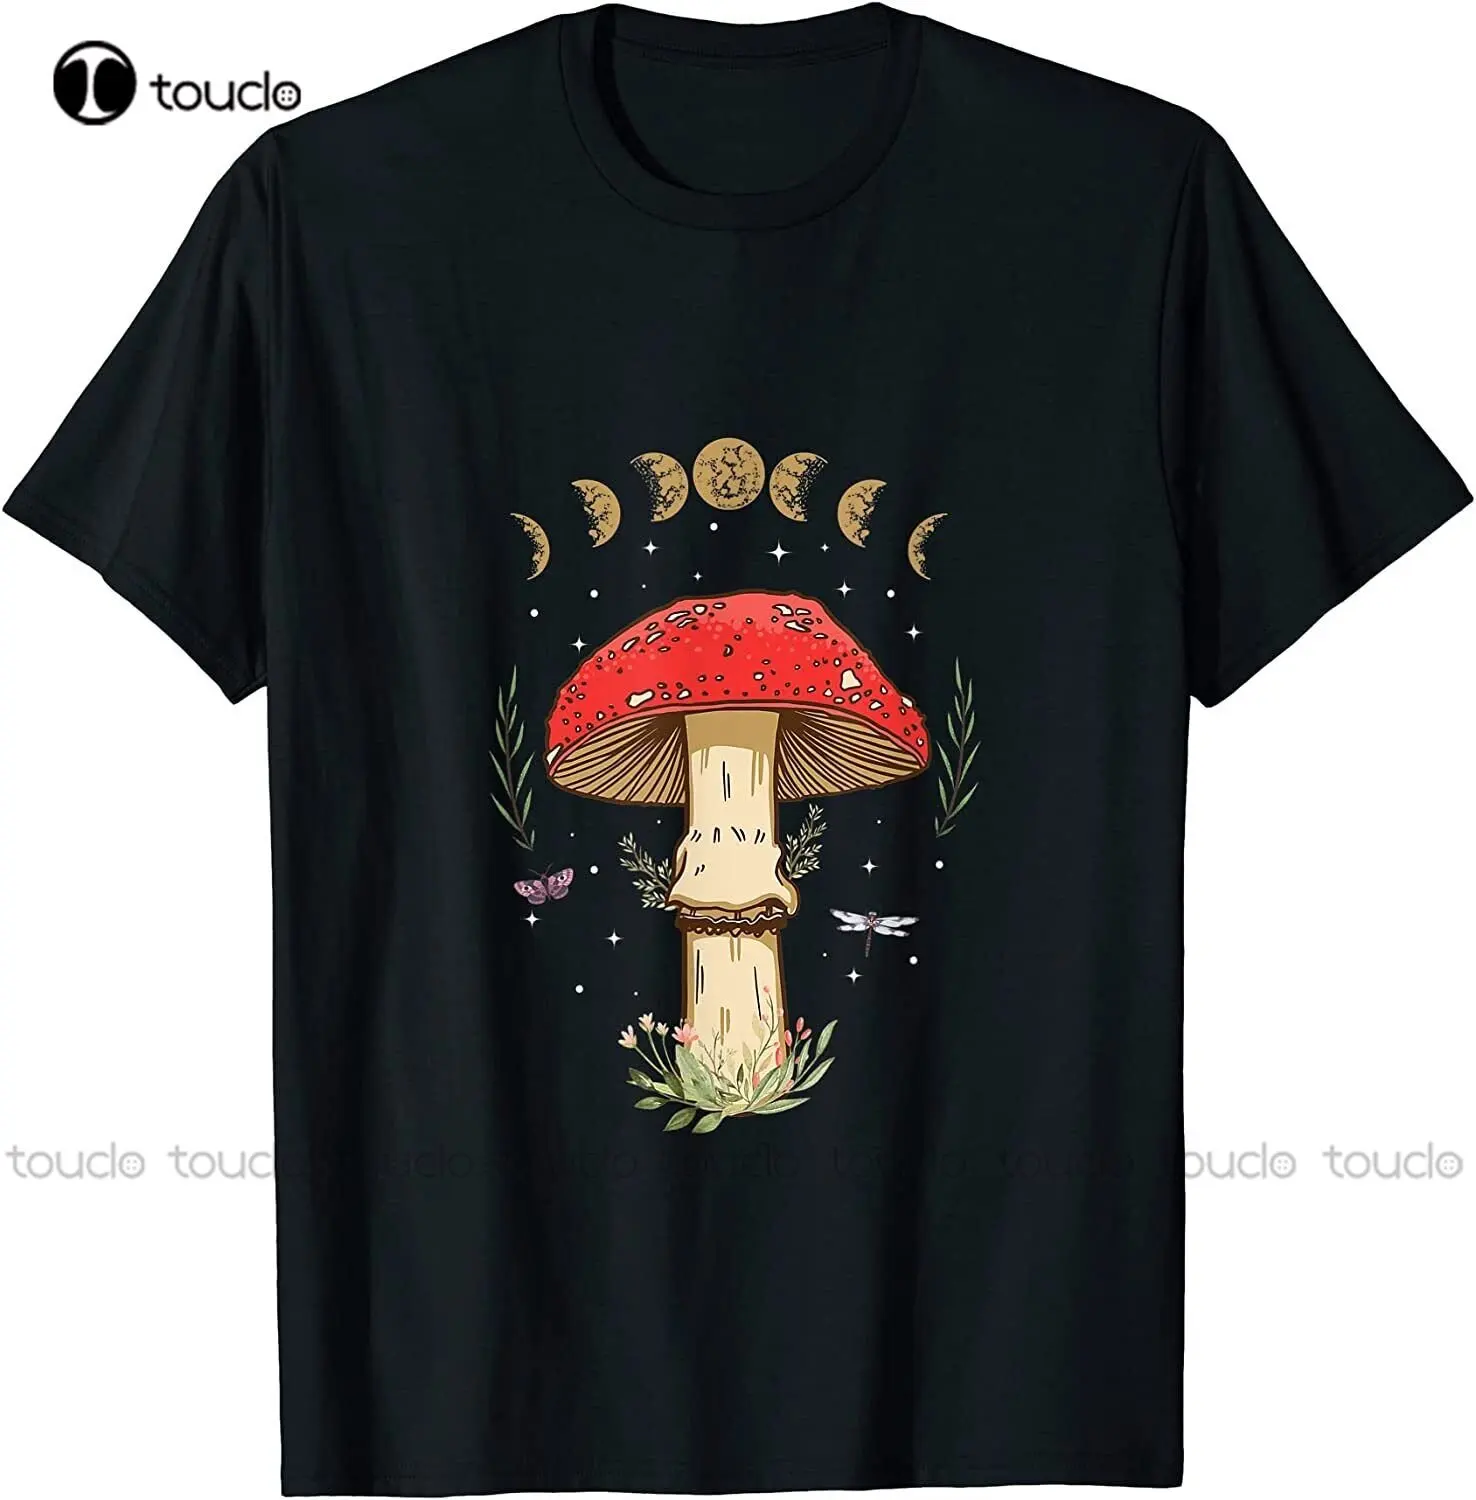 

Dark Academia Cottagecore Aesthetic Magical Mushroom Fungi T-Shirt Christian Tshirts Women Digital Printing Tee Shirts Xs-5Xl